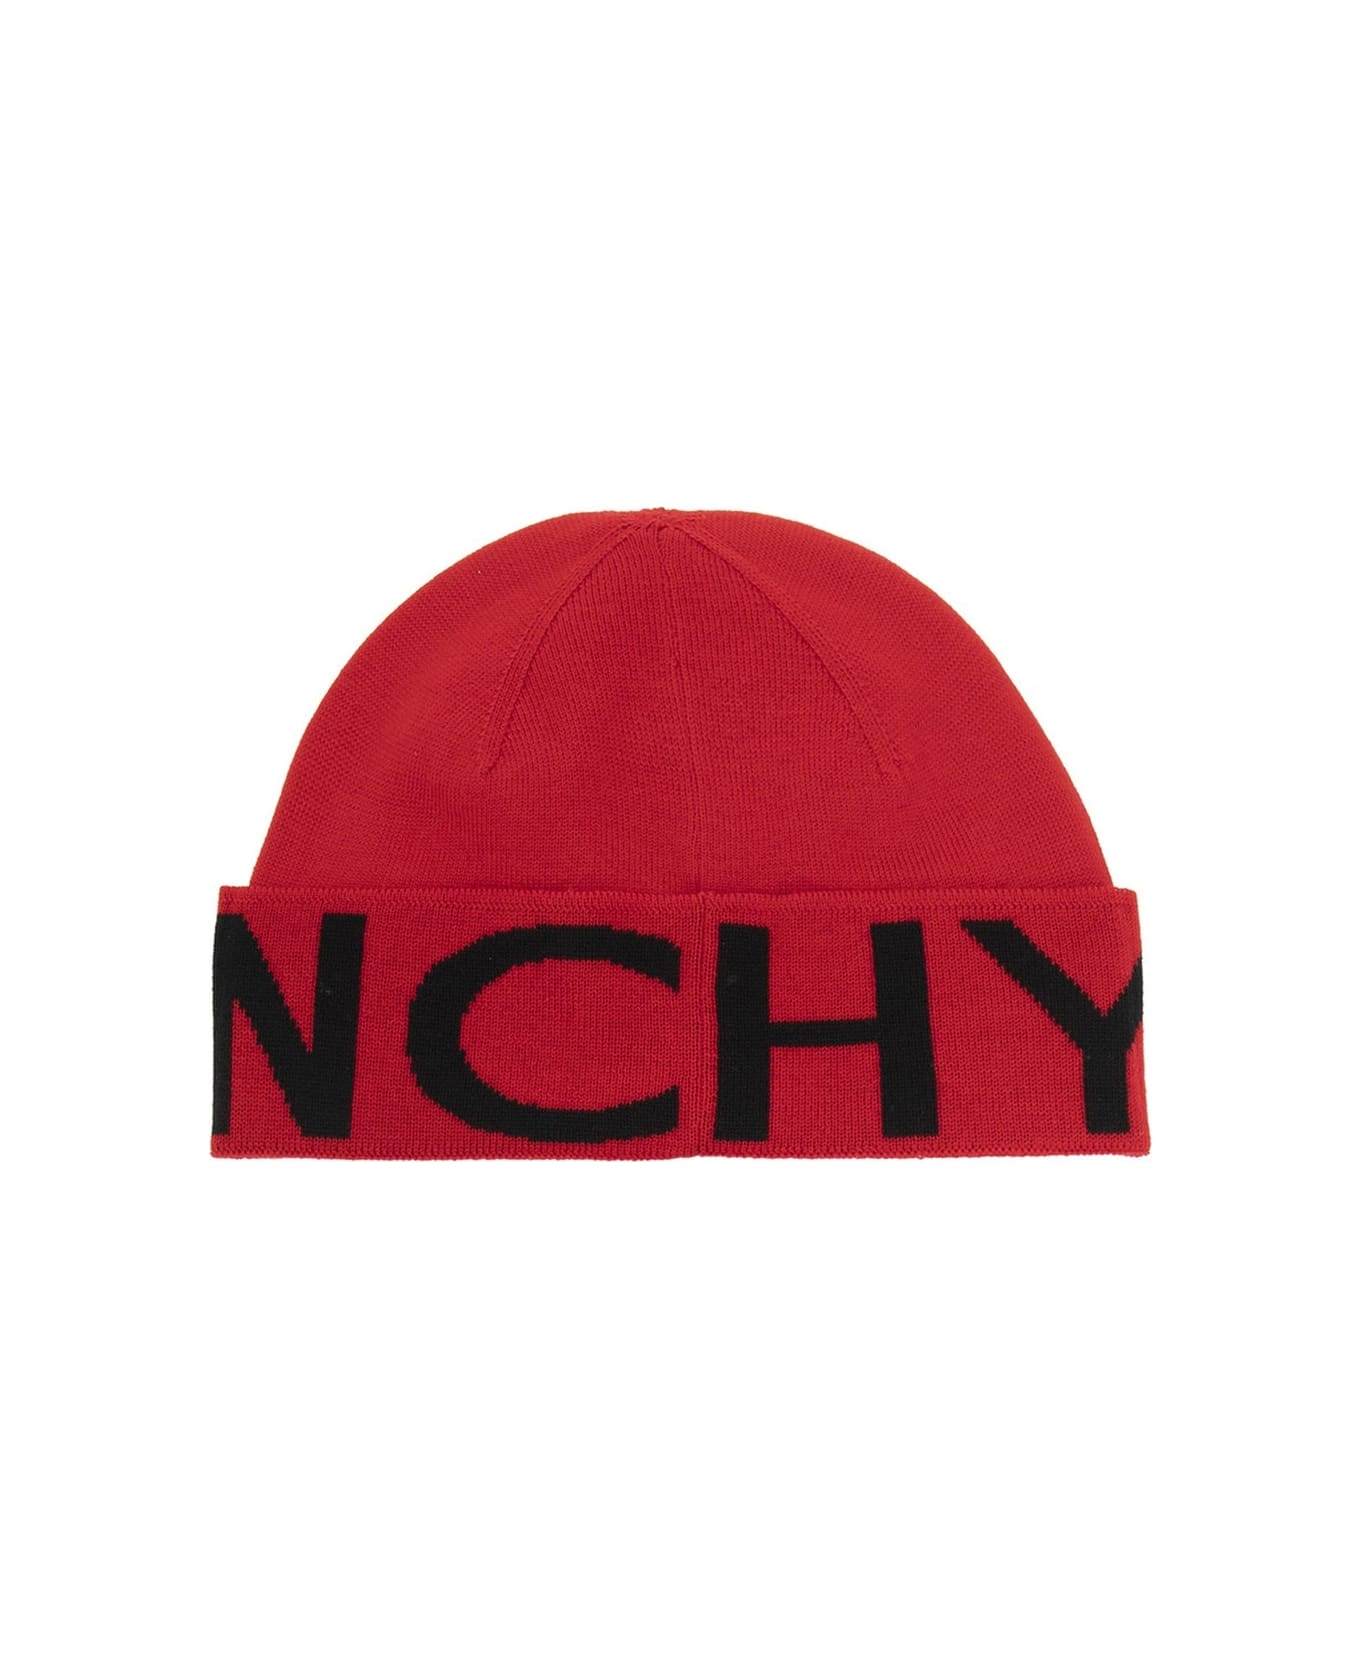 Givenchy Wool Logo hat vermelho - Red